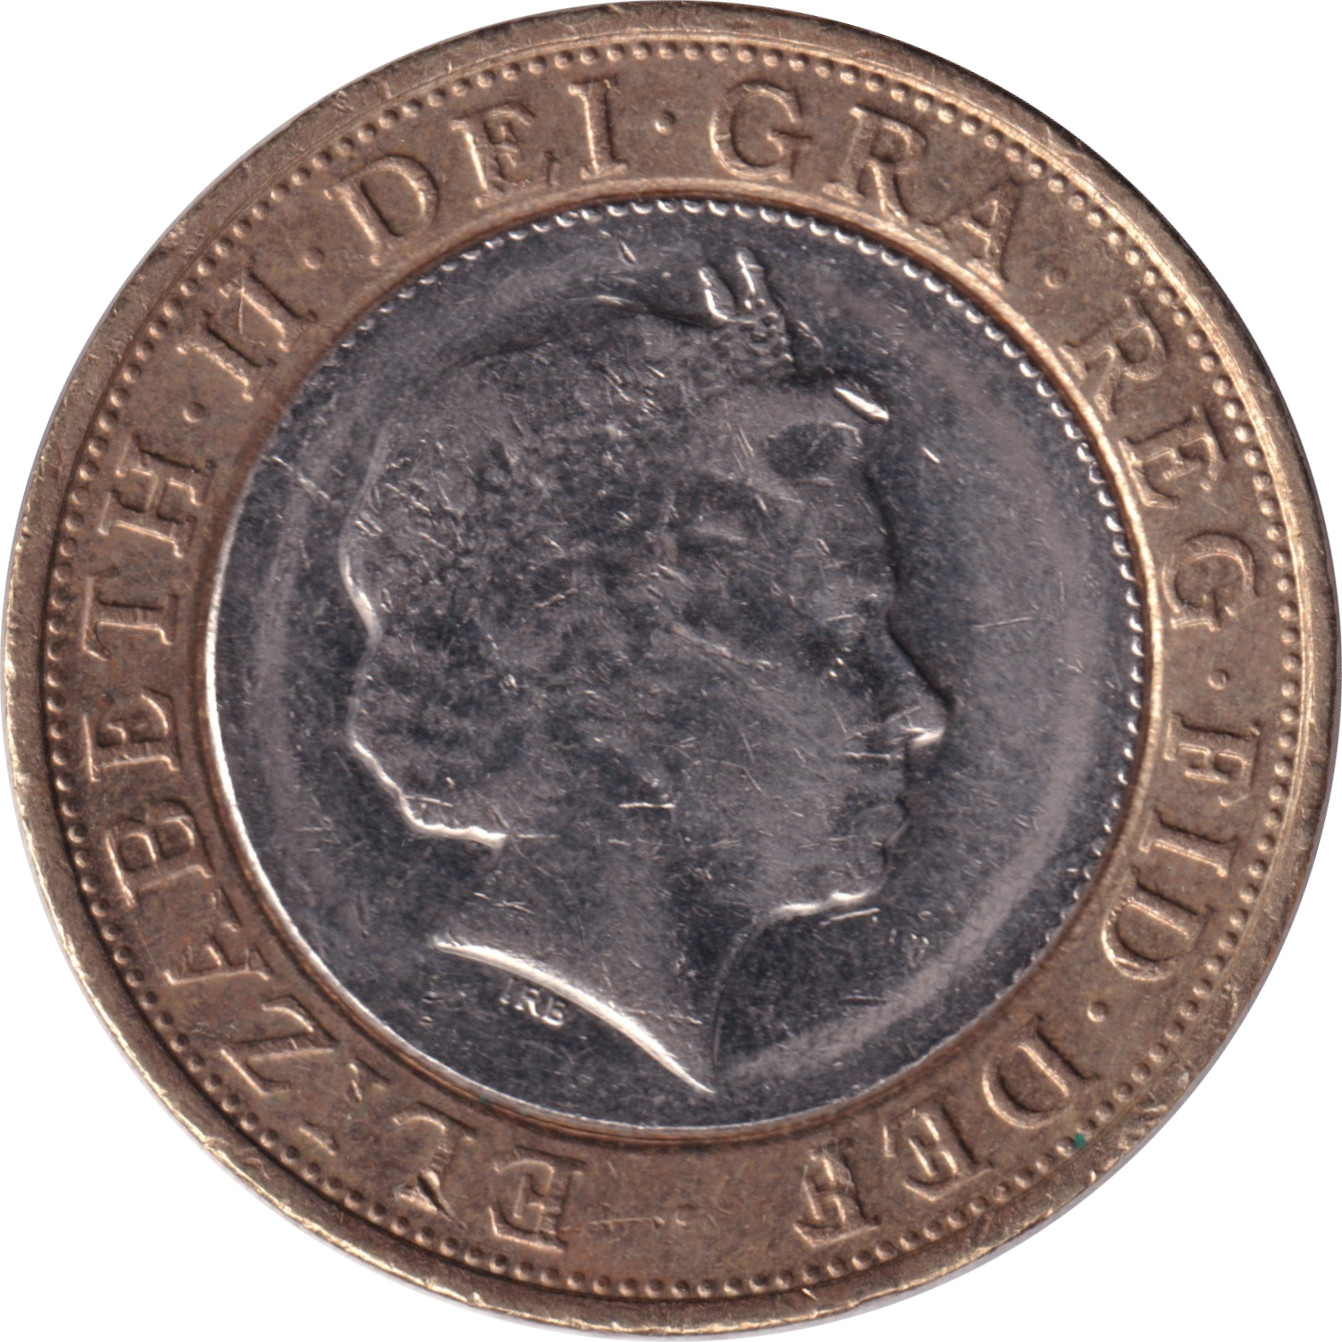 2 pound - Elizabeth II - Tête agée